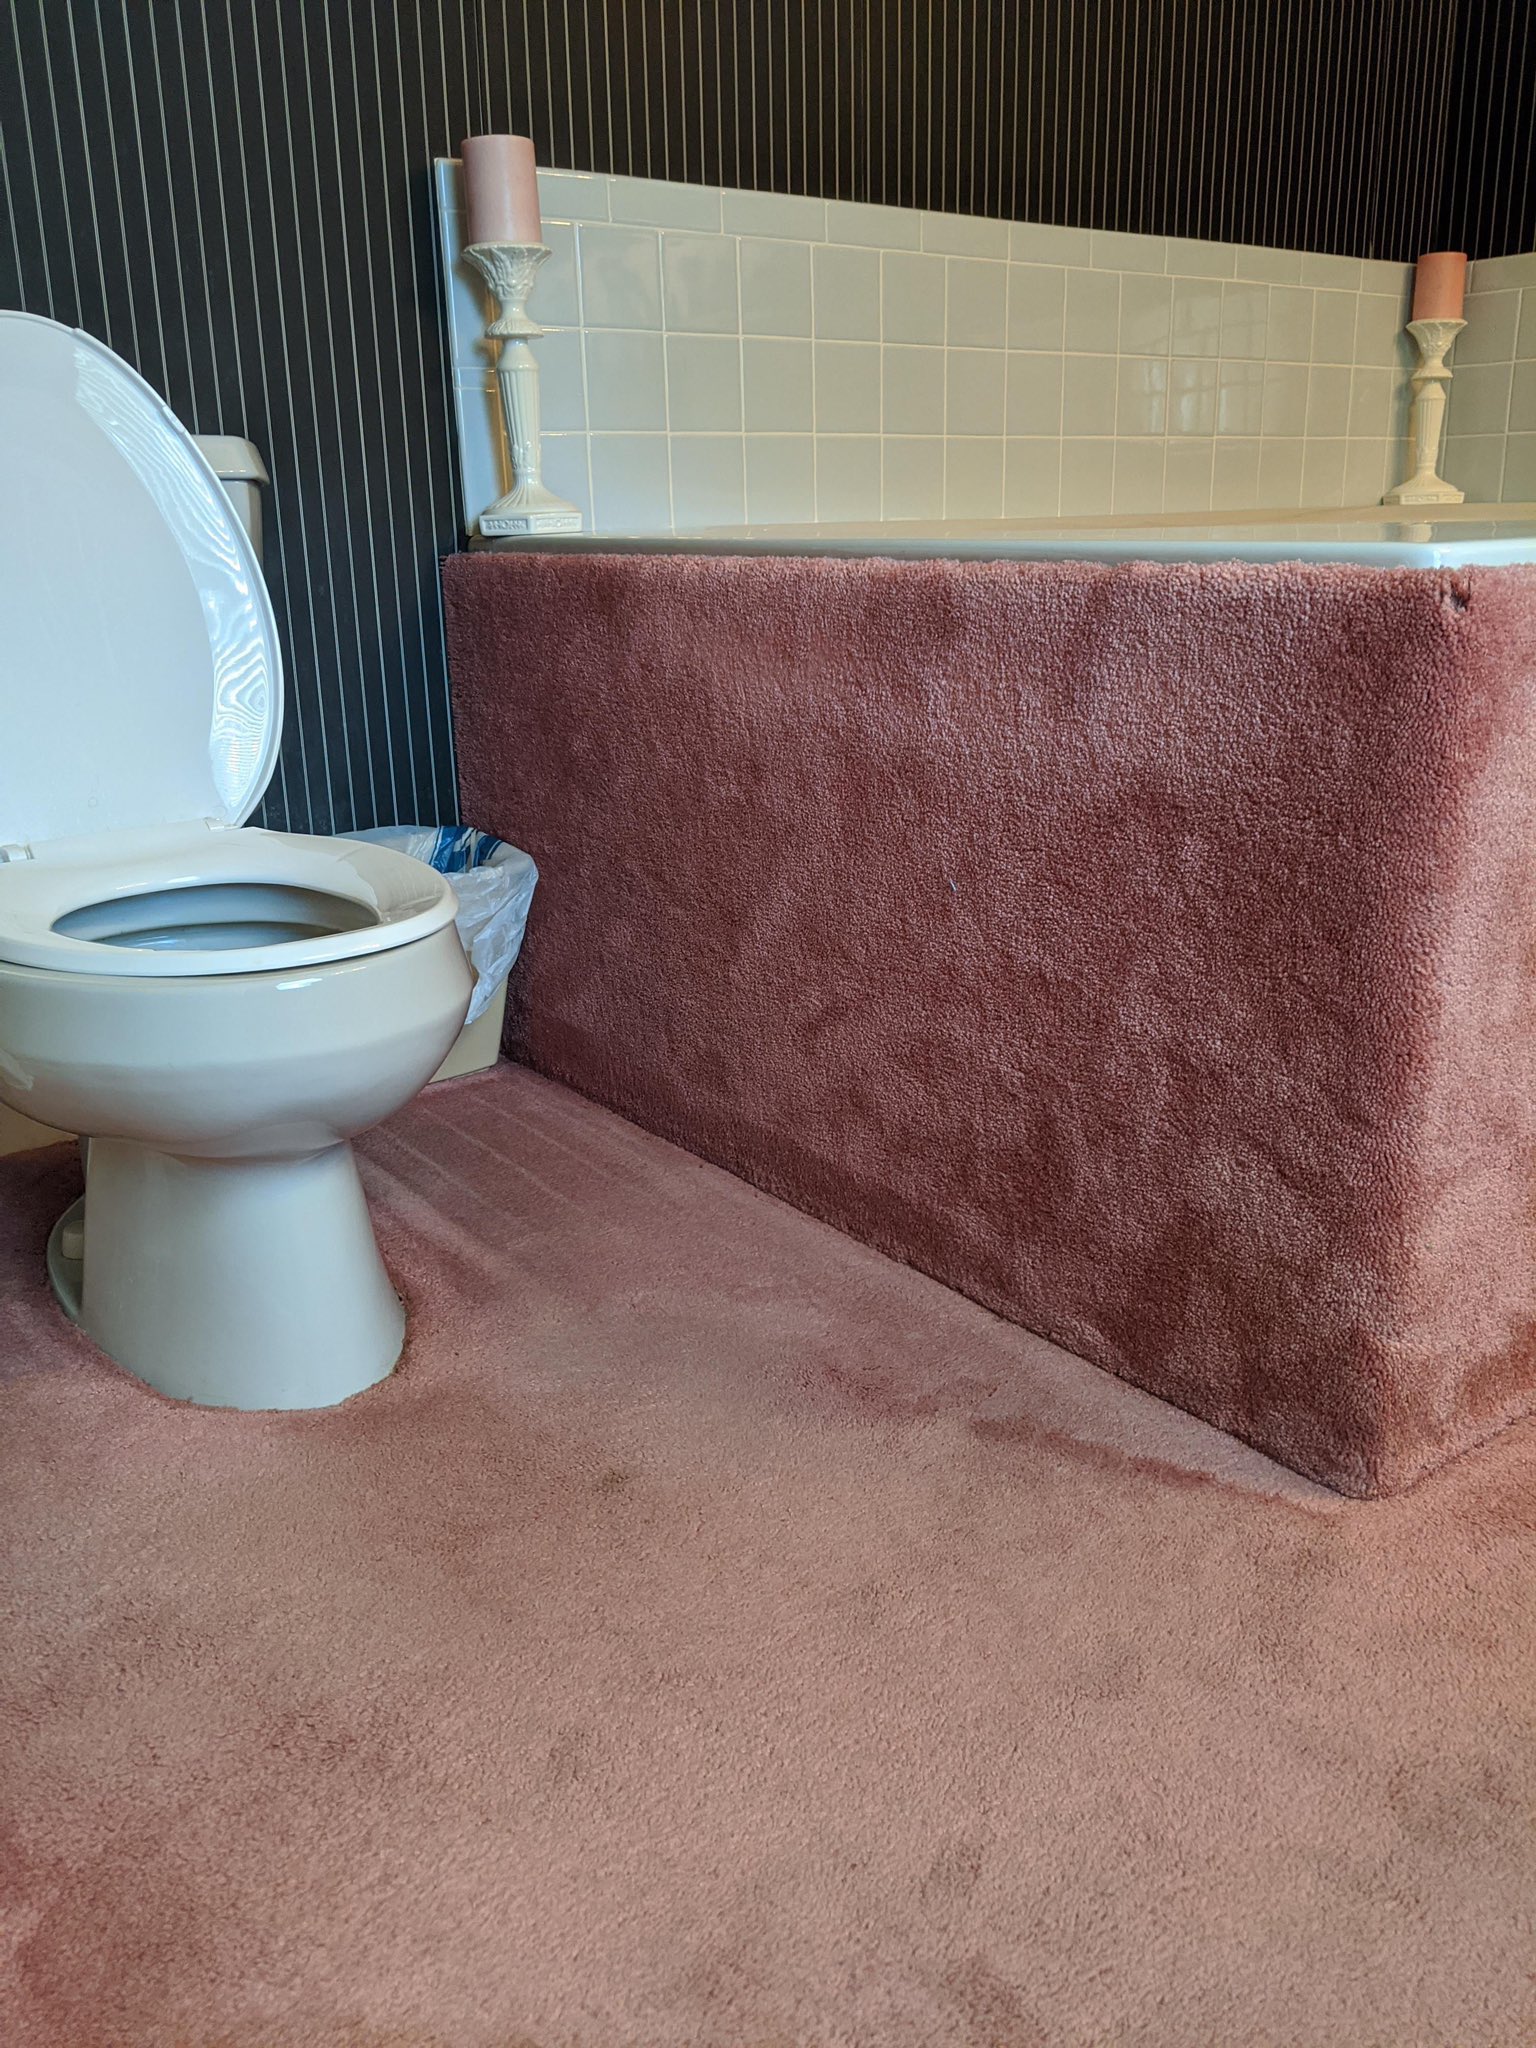 threatening bathrooms - bathroom with carpet